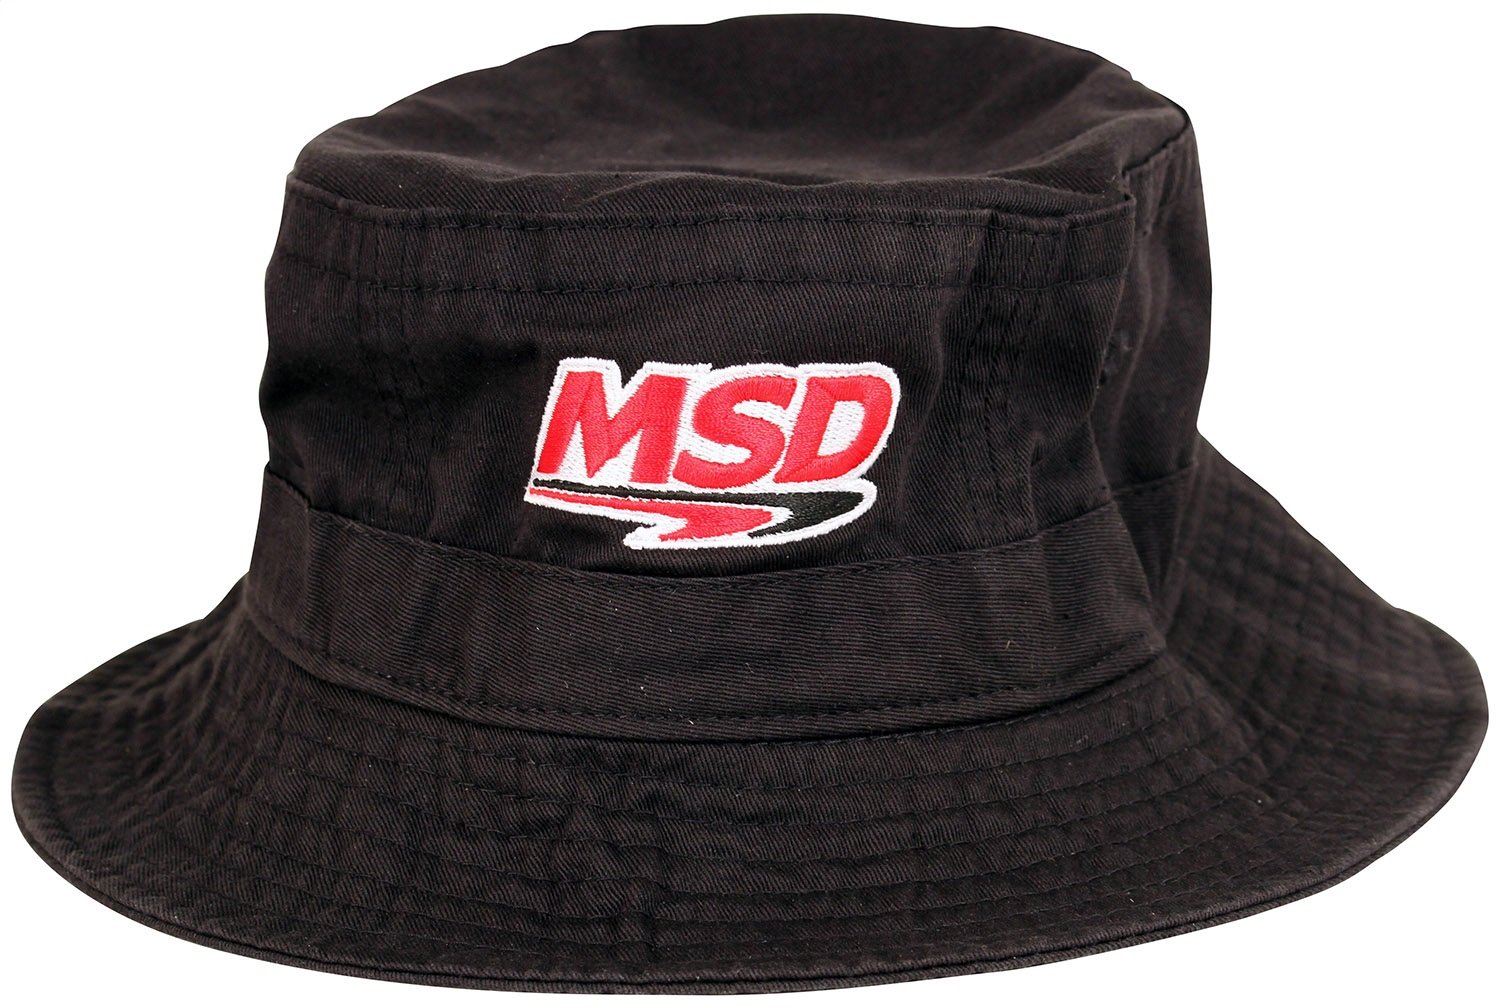 CAP MSD SPORTSMAN L/XL